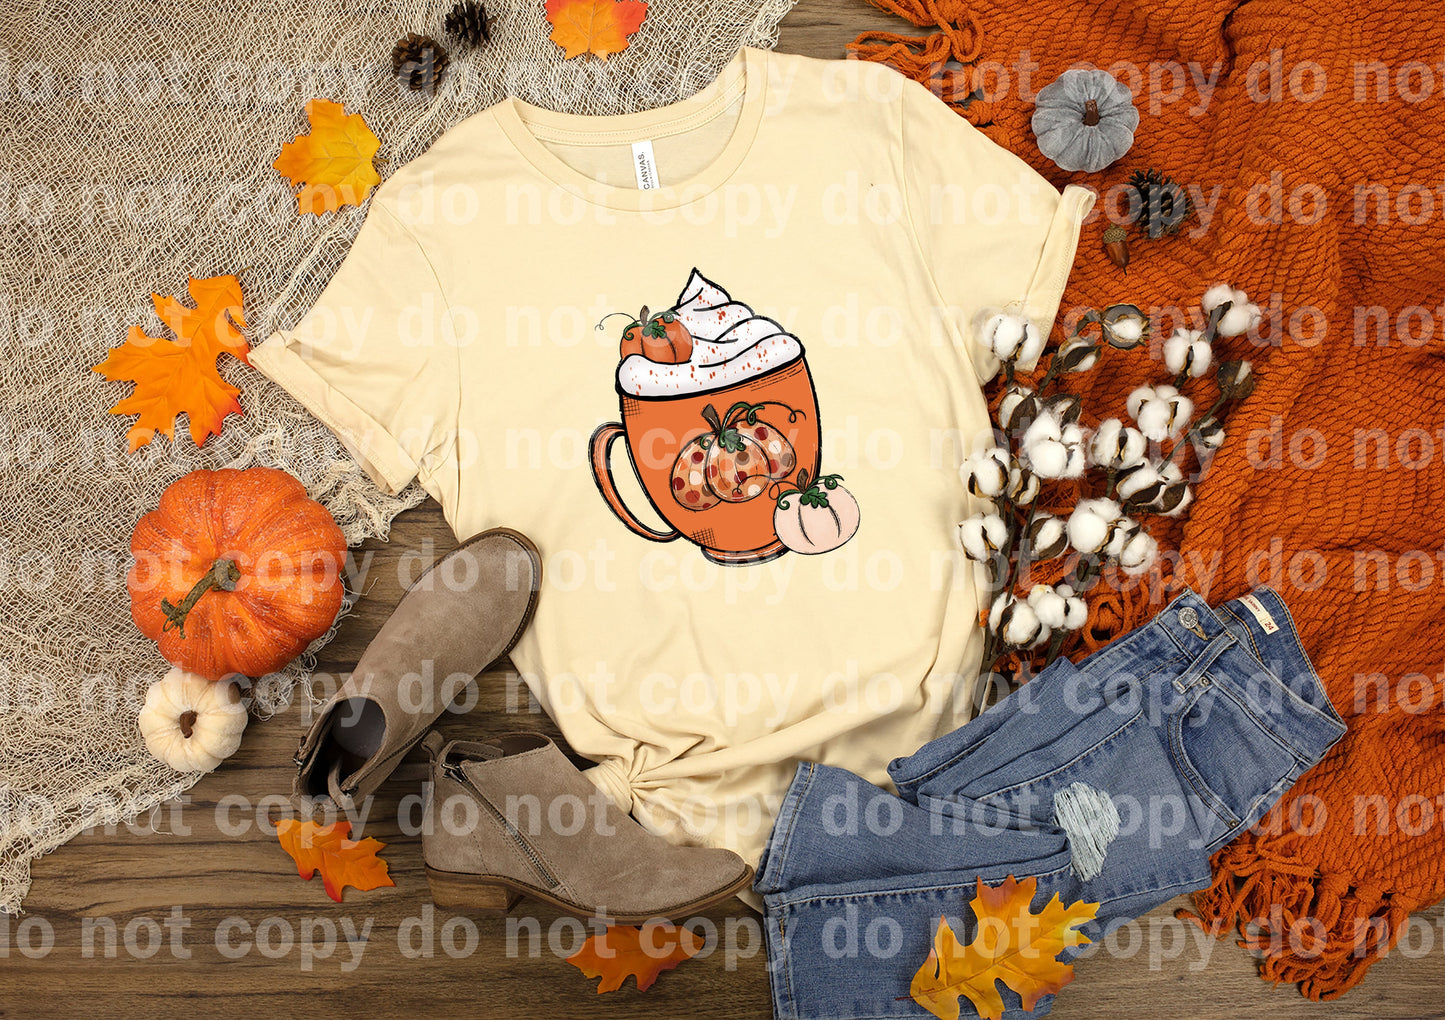 Pumpkin Cup Dream Print or Sublimation Print